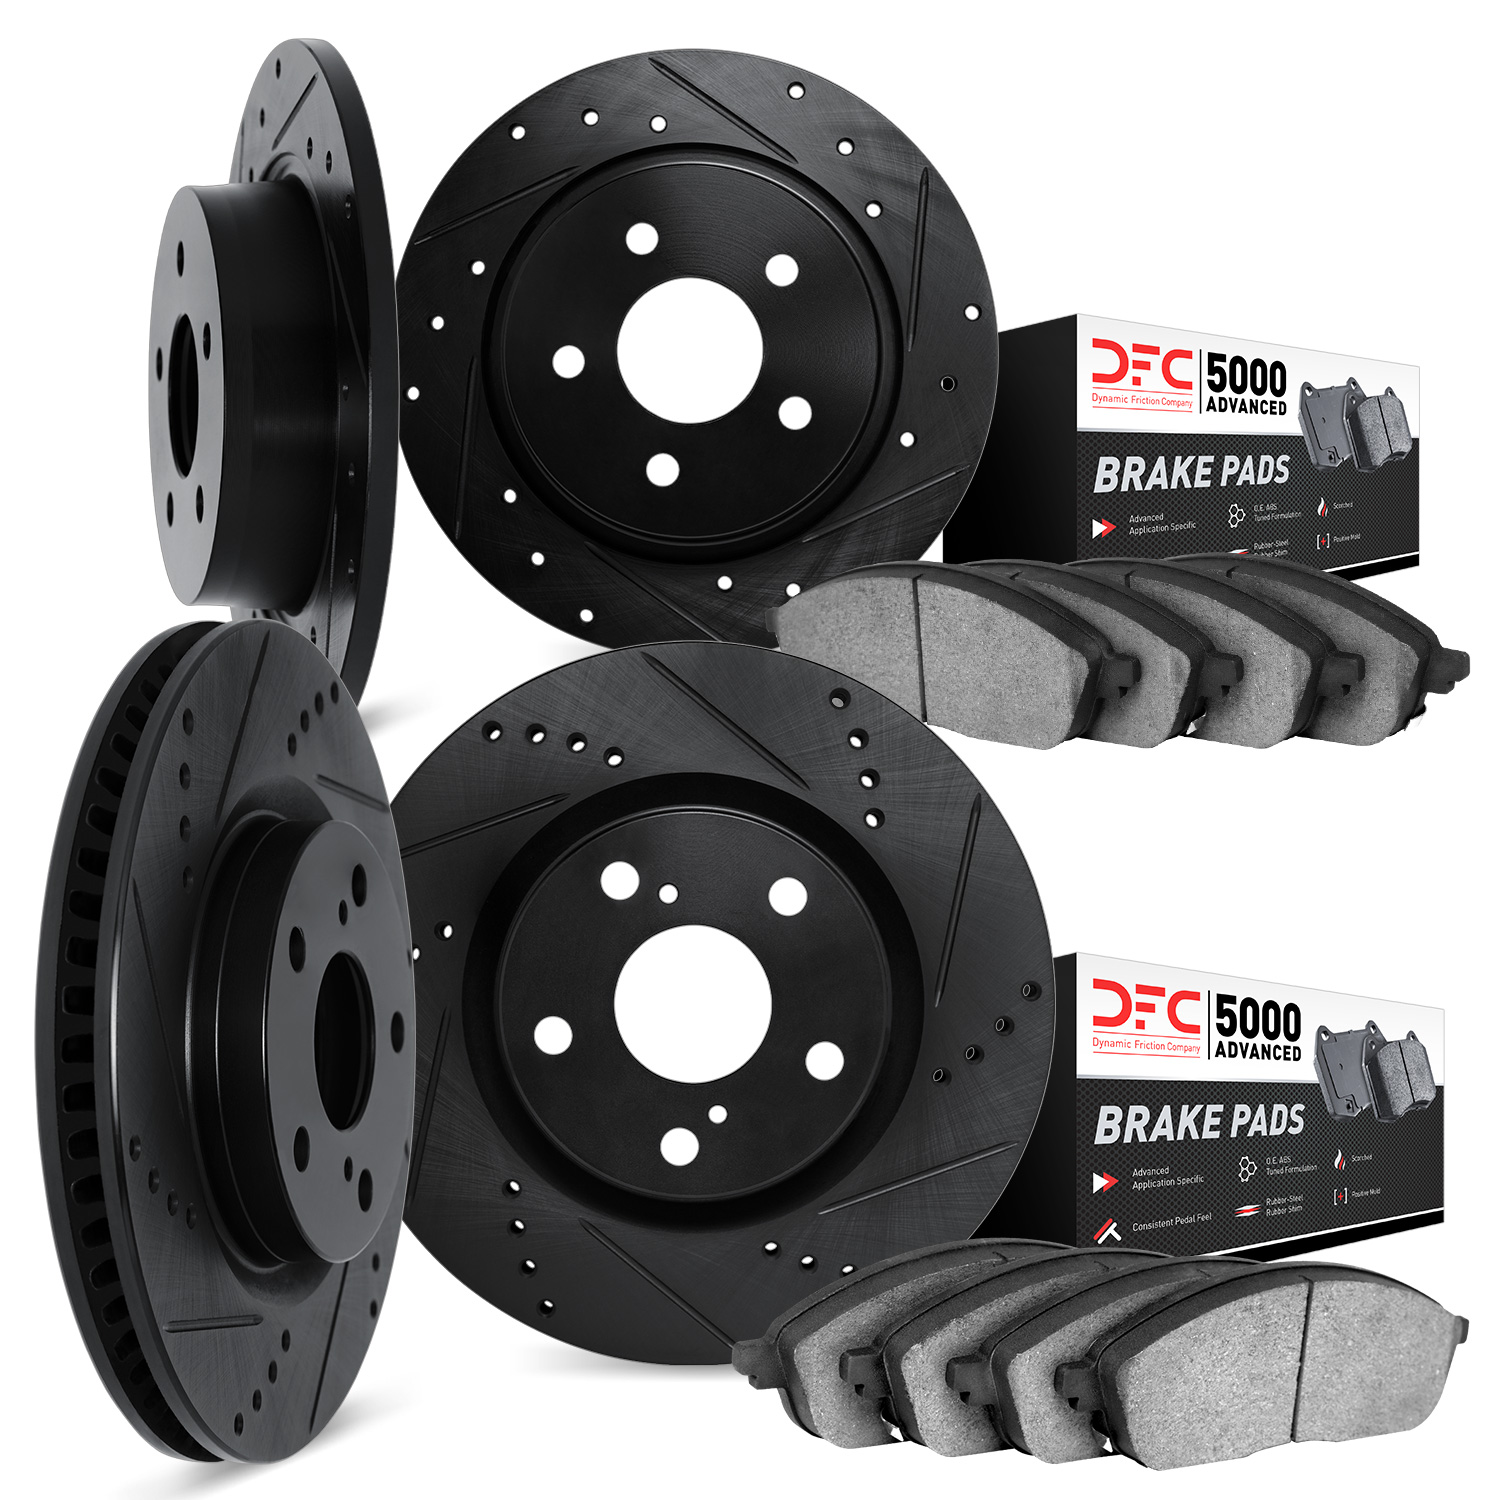 8504-54296 Drilled/Slotted Brake Rotors w/5000 Advanced Brake Pads Kit [Black], 2013-2020 Ford/Lincoln/Mercury/Mazda, Position: